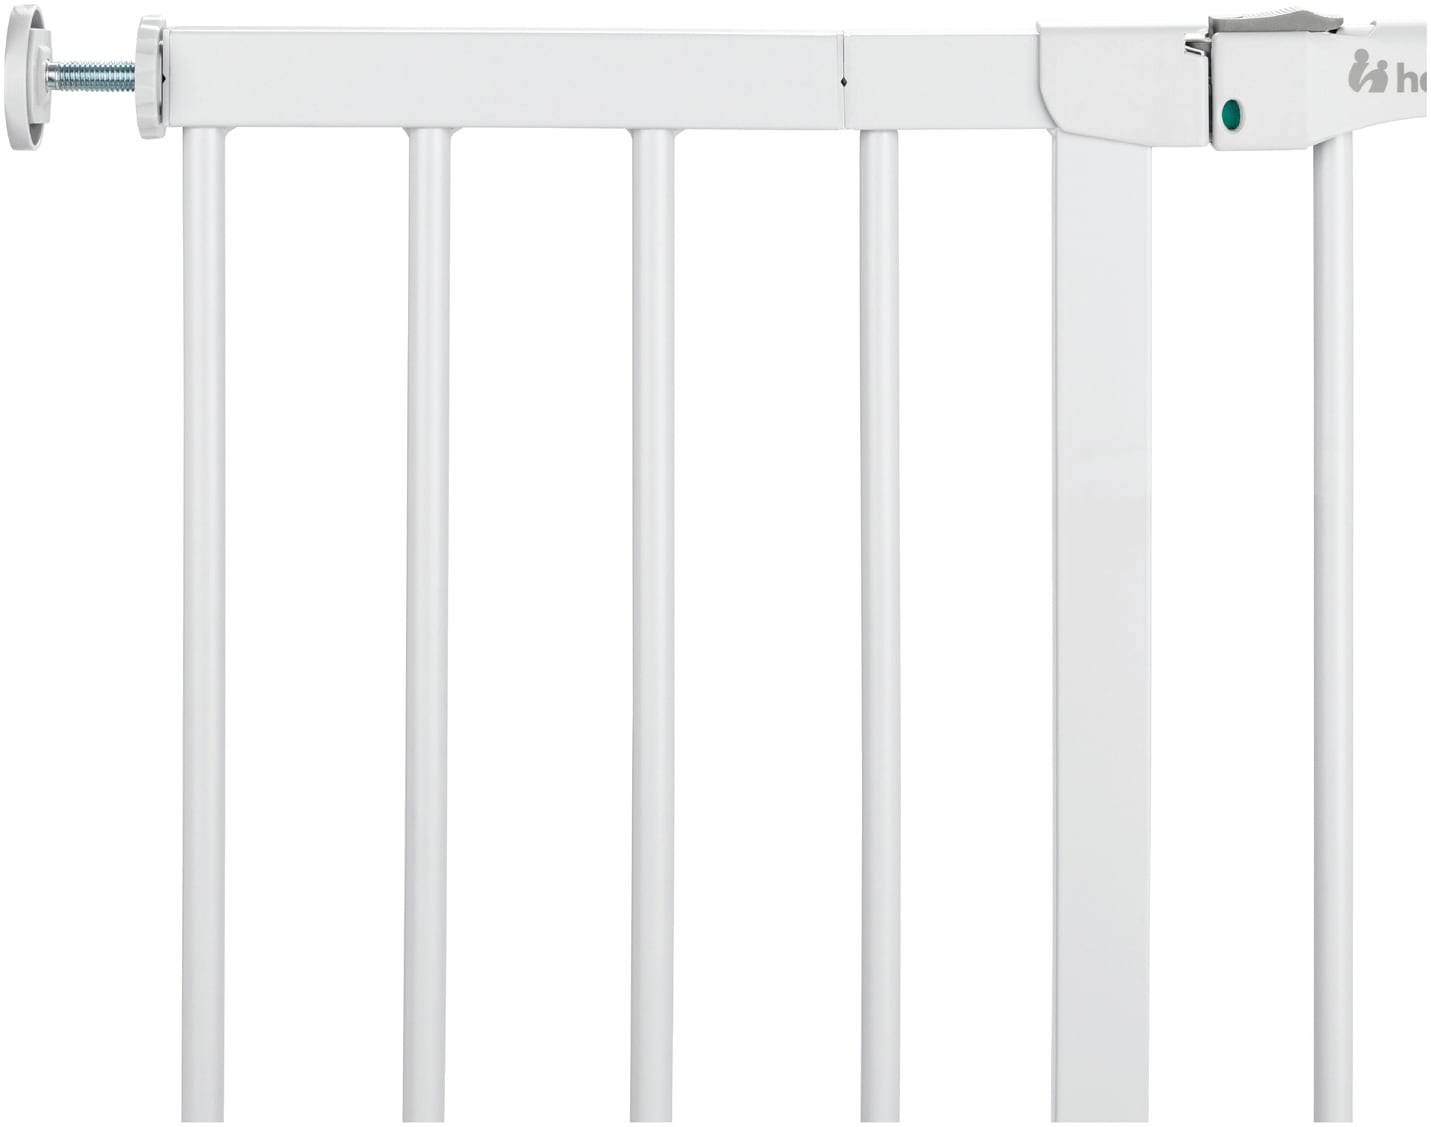 Hauck Türschutzgitter »Clear Step Autoclose 2 Set inklusive Verlängerung 21 cm, White«, auch als Treppenschutzgitter verwendbar; 96-101 cm; flacher Durchgang